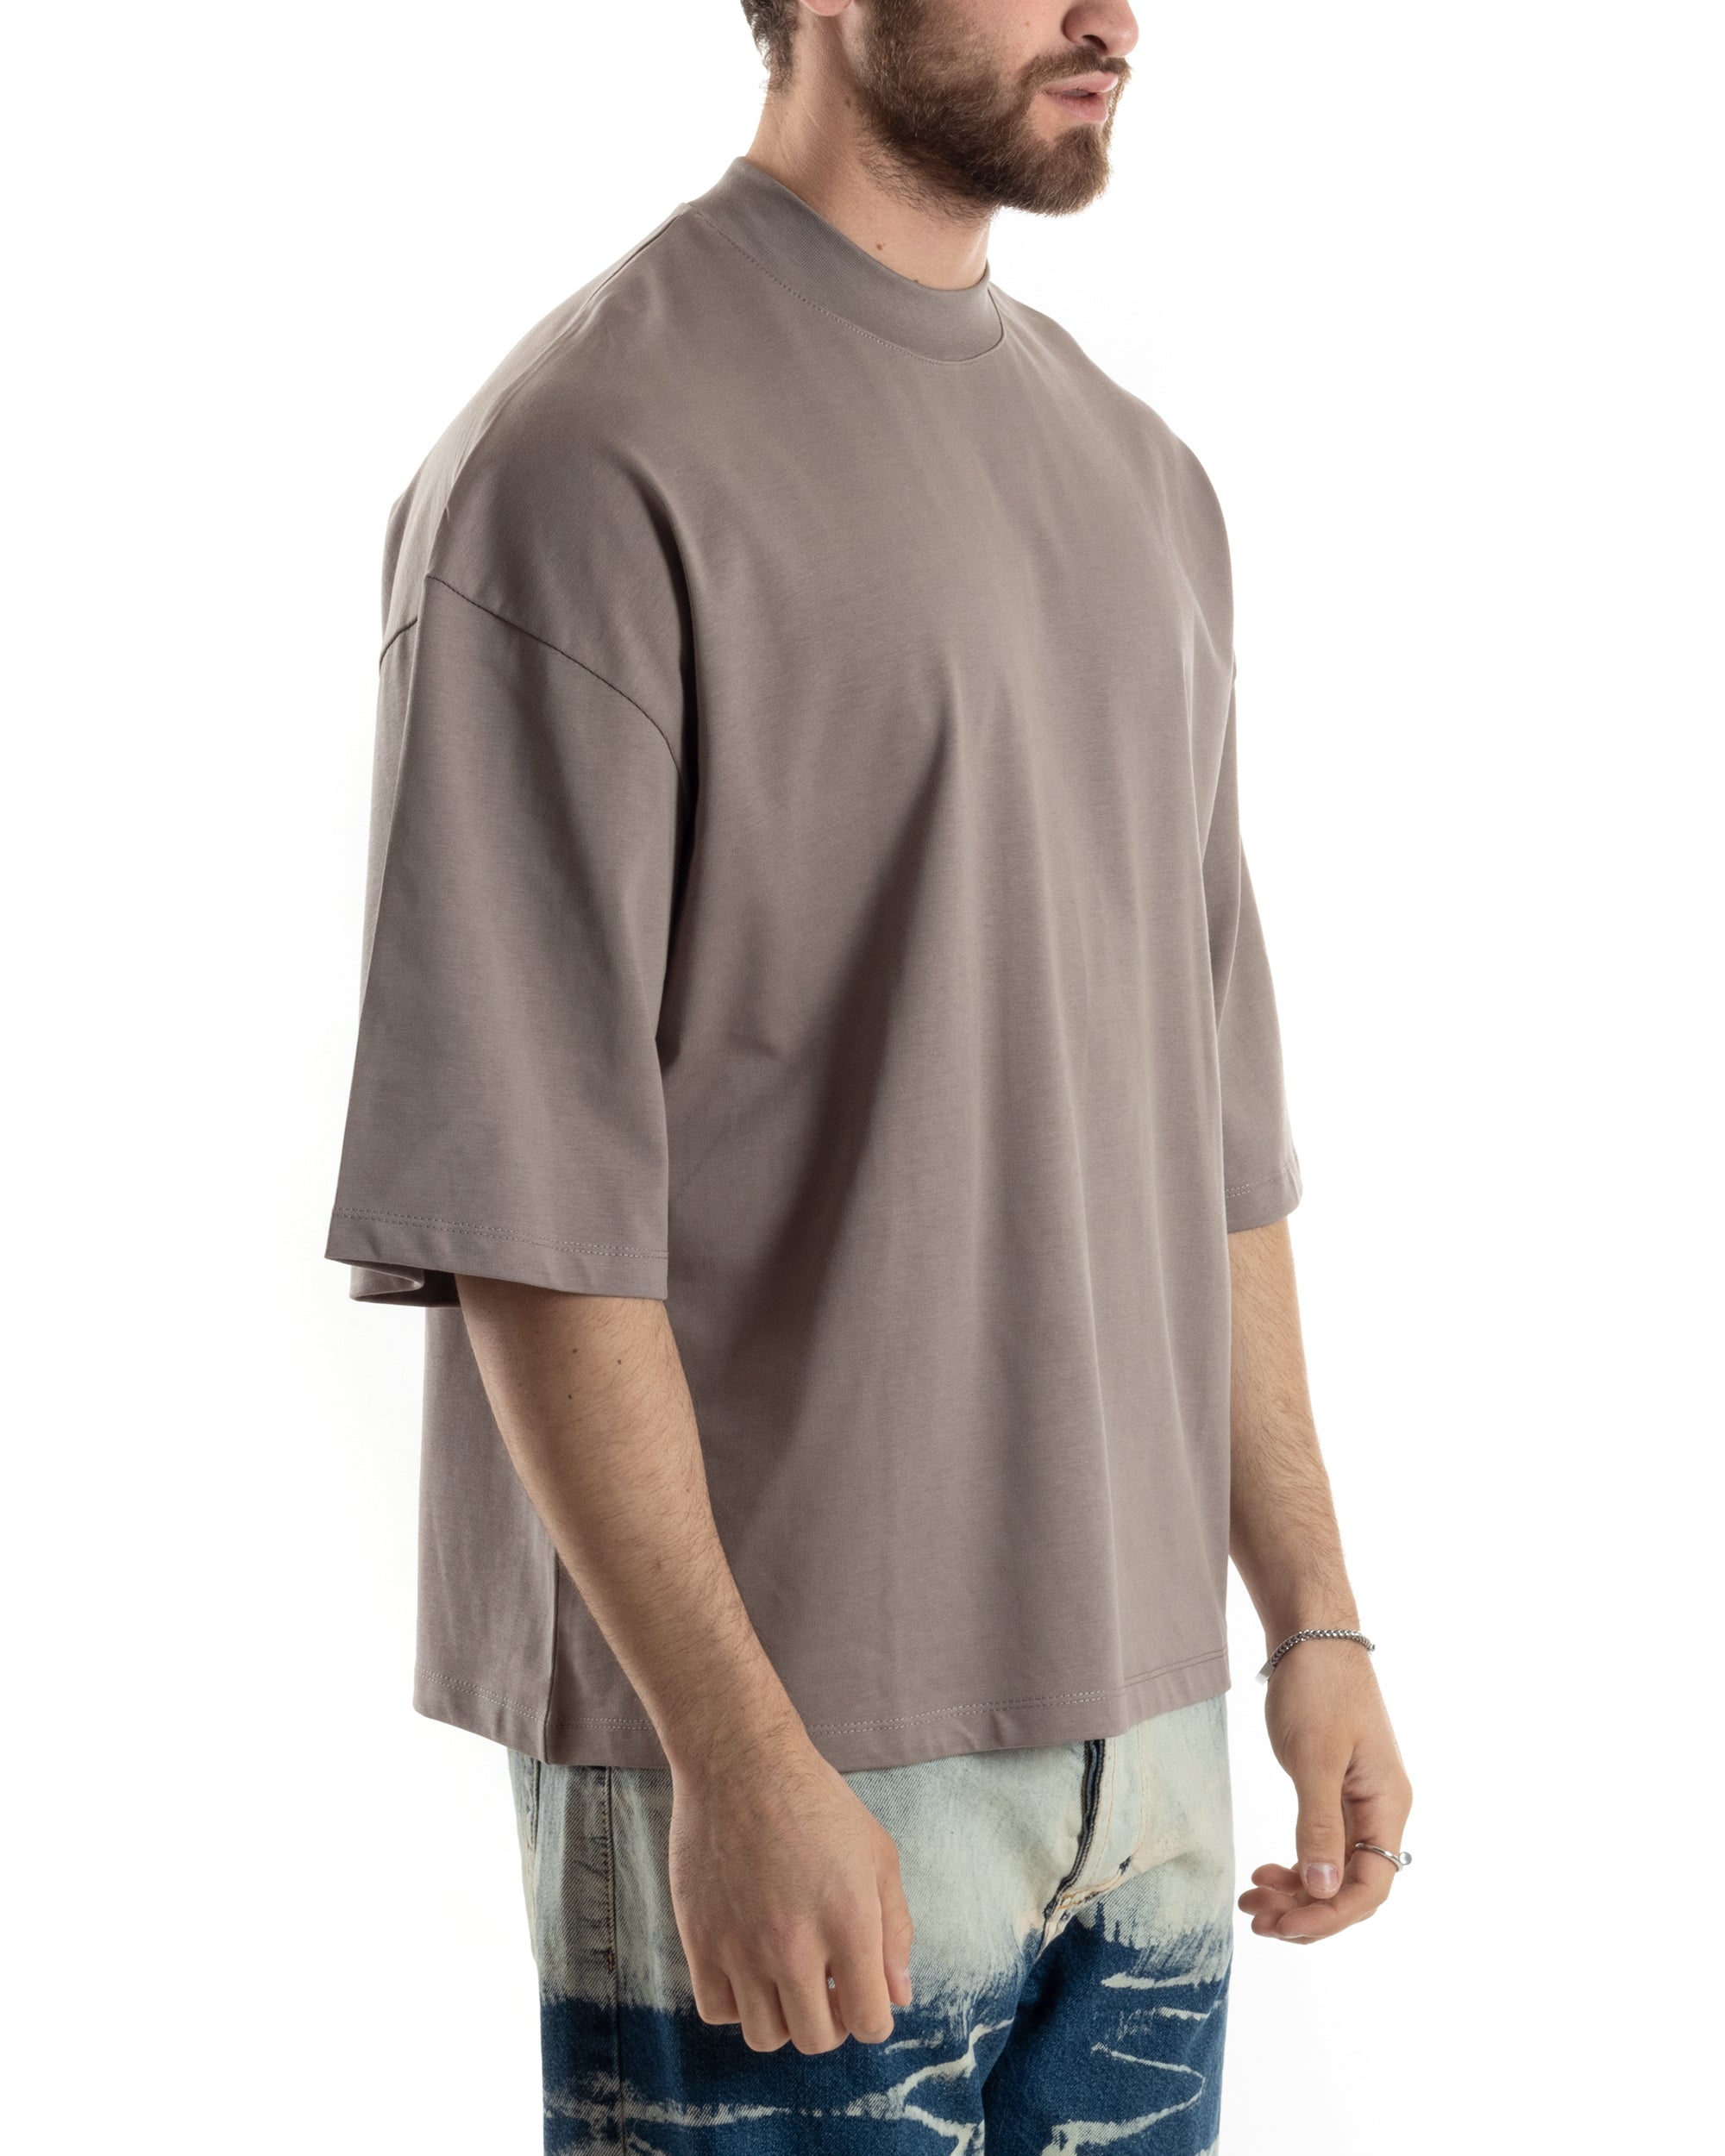 T-shirt Uomo Girocollo Boxy Fit Oversize Cotone Spalla Scesa Gola Alta Casual Basic Fango GIOSAL-TS3025A